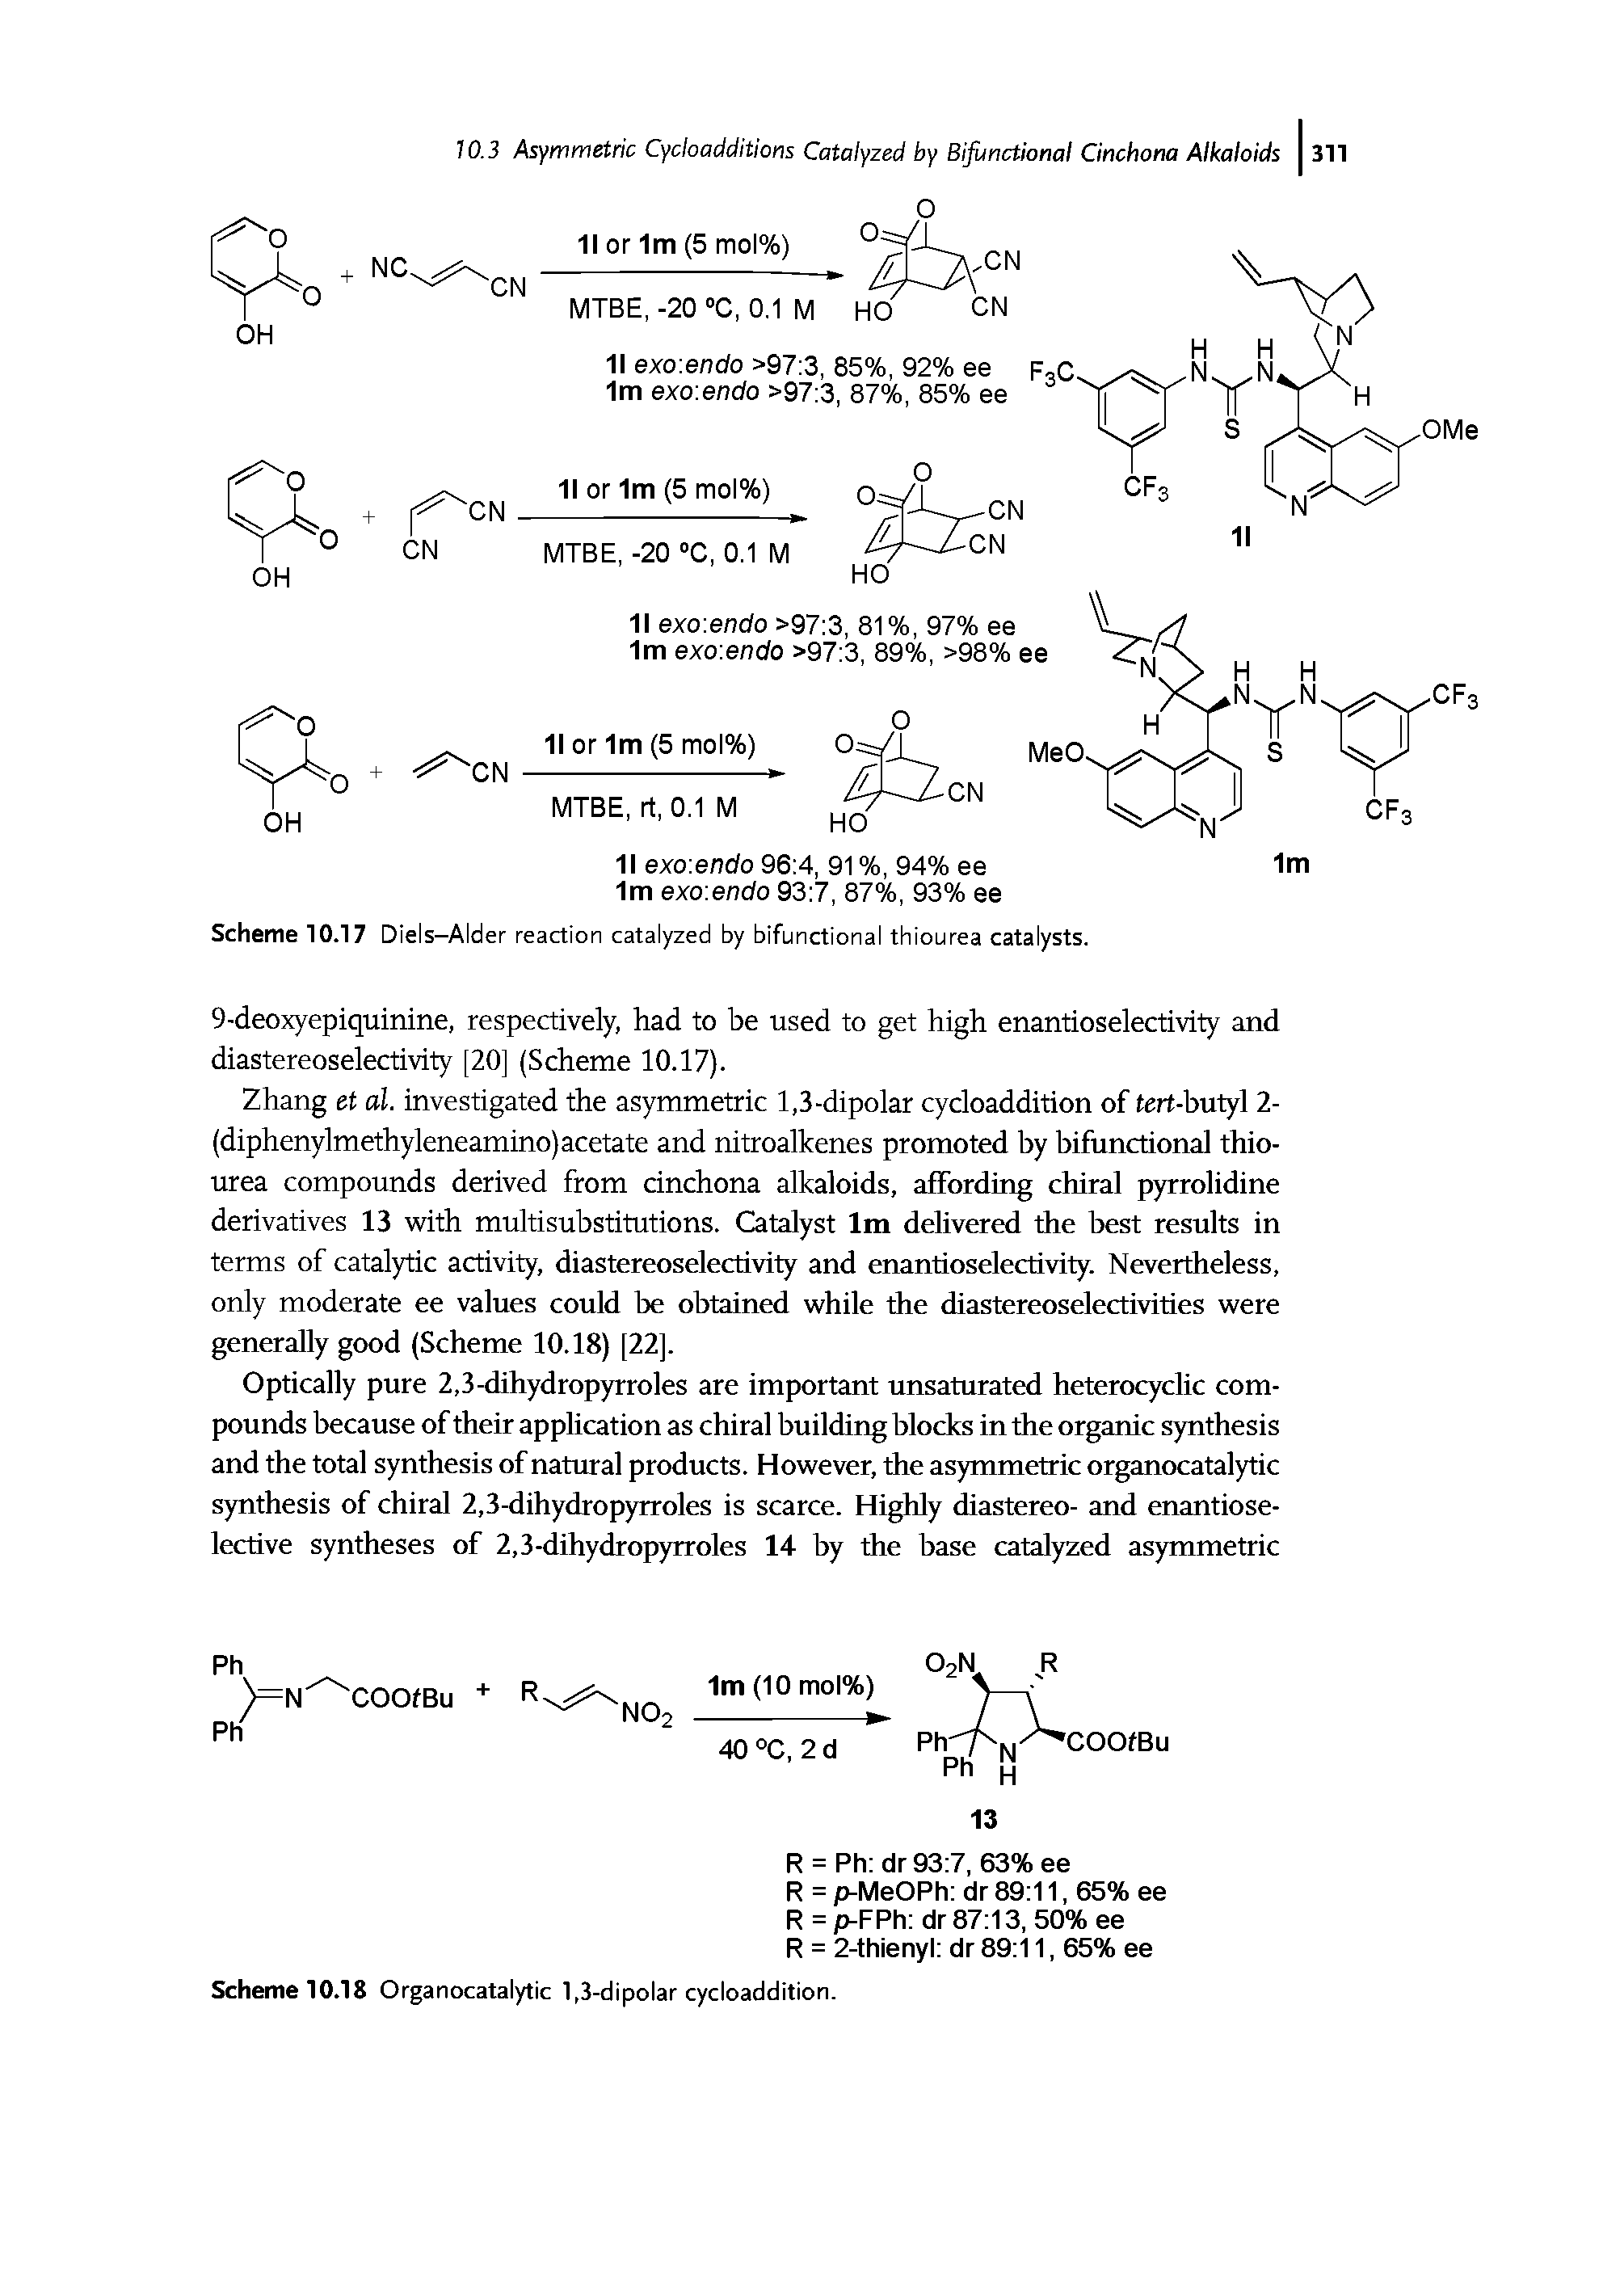 Scheme 10.17 Diels-Alder reaction catalyzed by bifunctional thiourea catalysts.